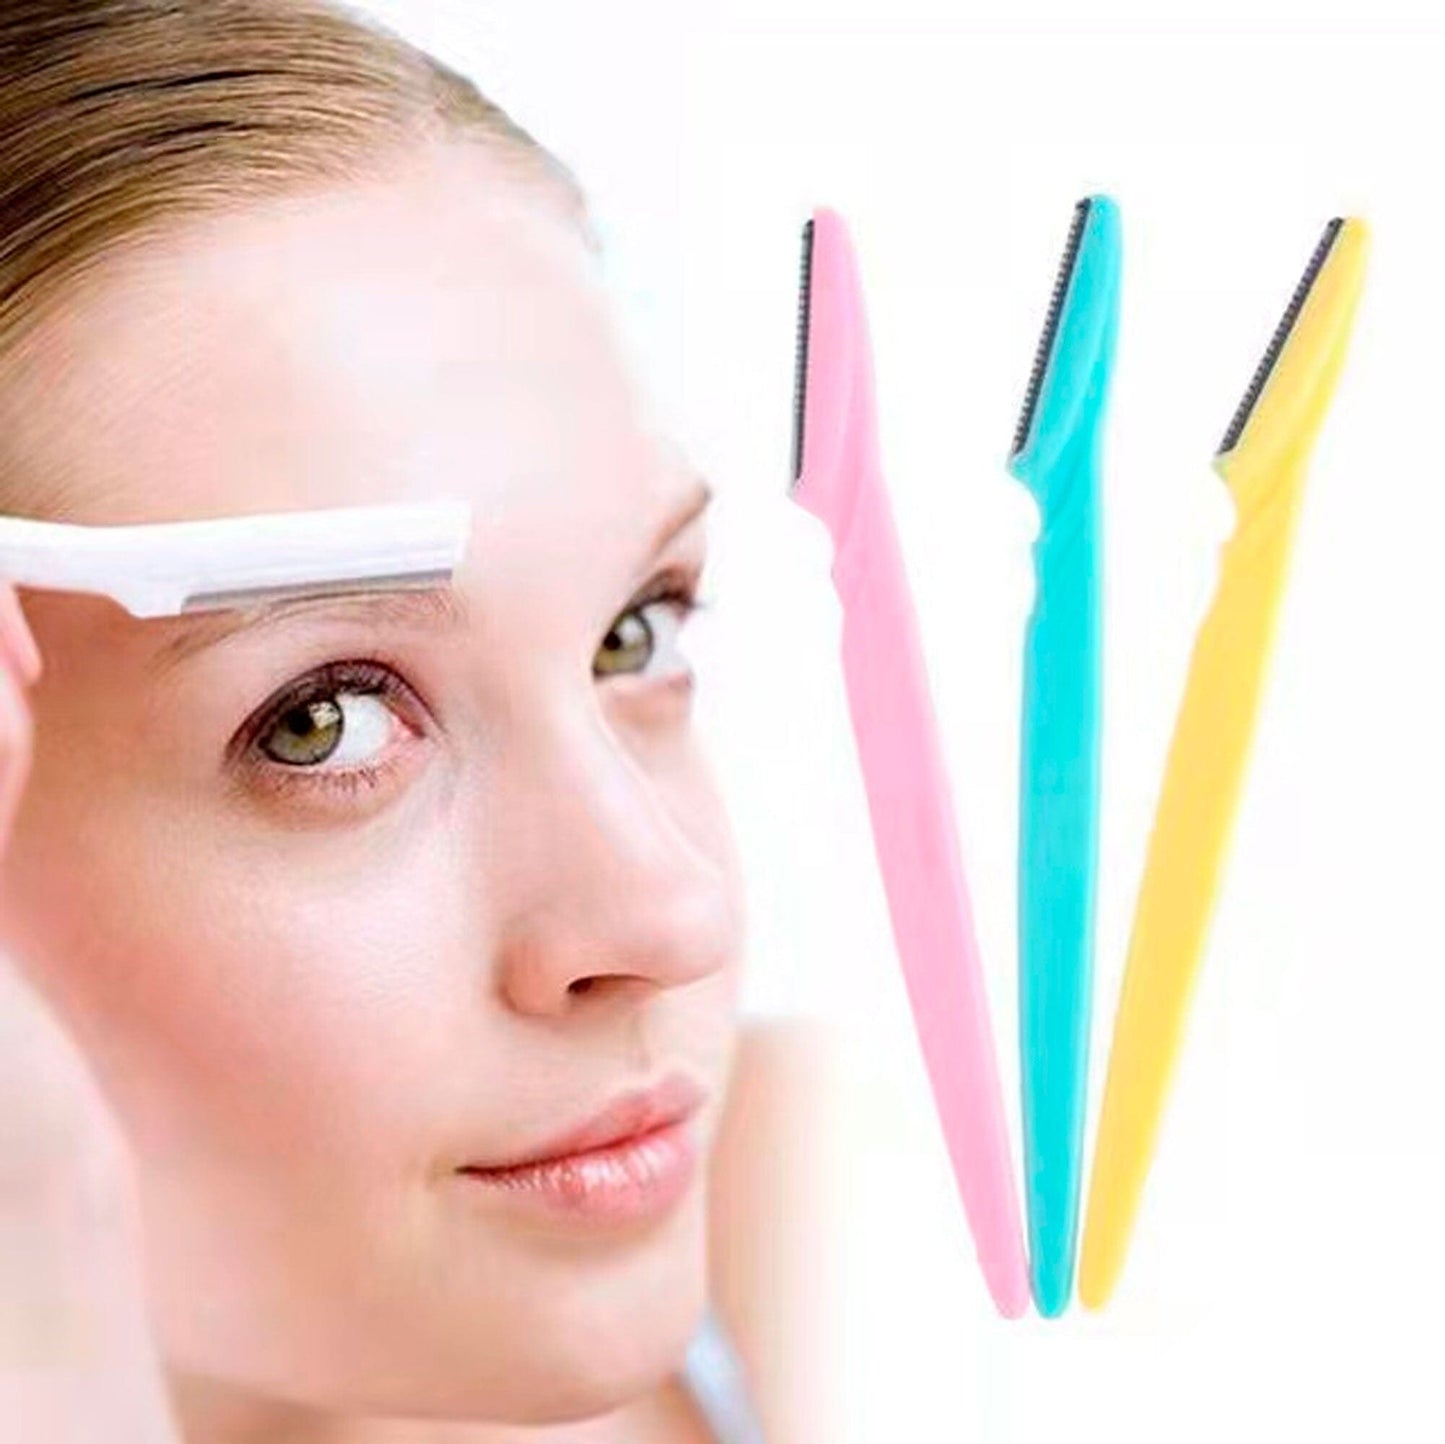 Tinkle Women's Stainless Steel Eyebrow Razor - Pack Of 3 Health & Beauty RAM 